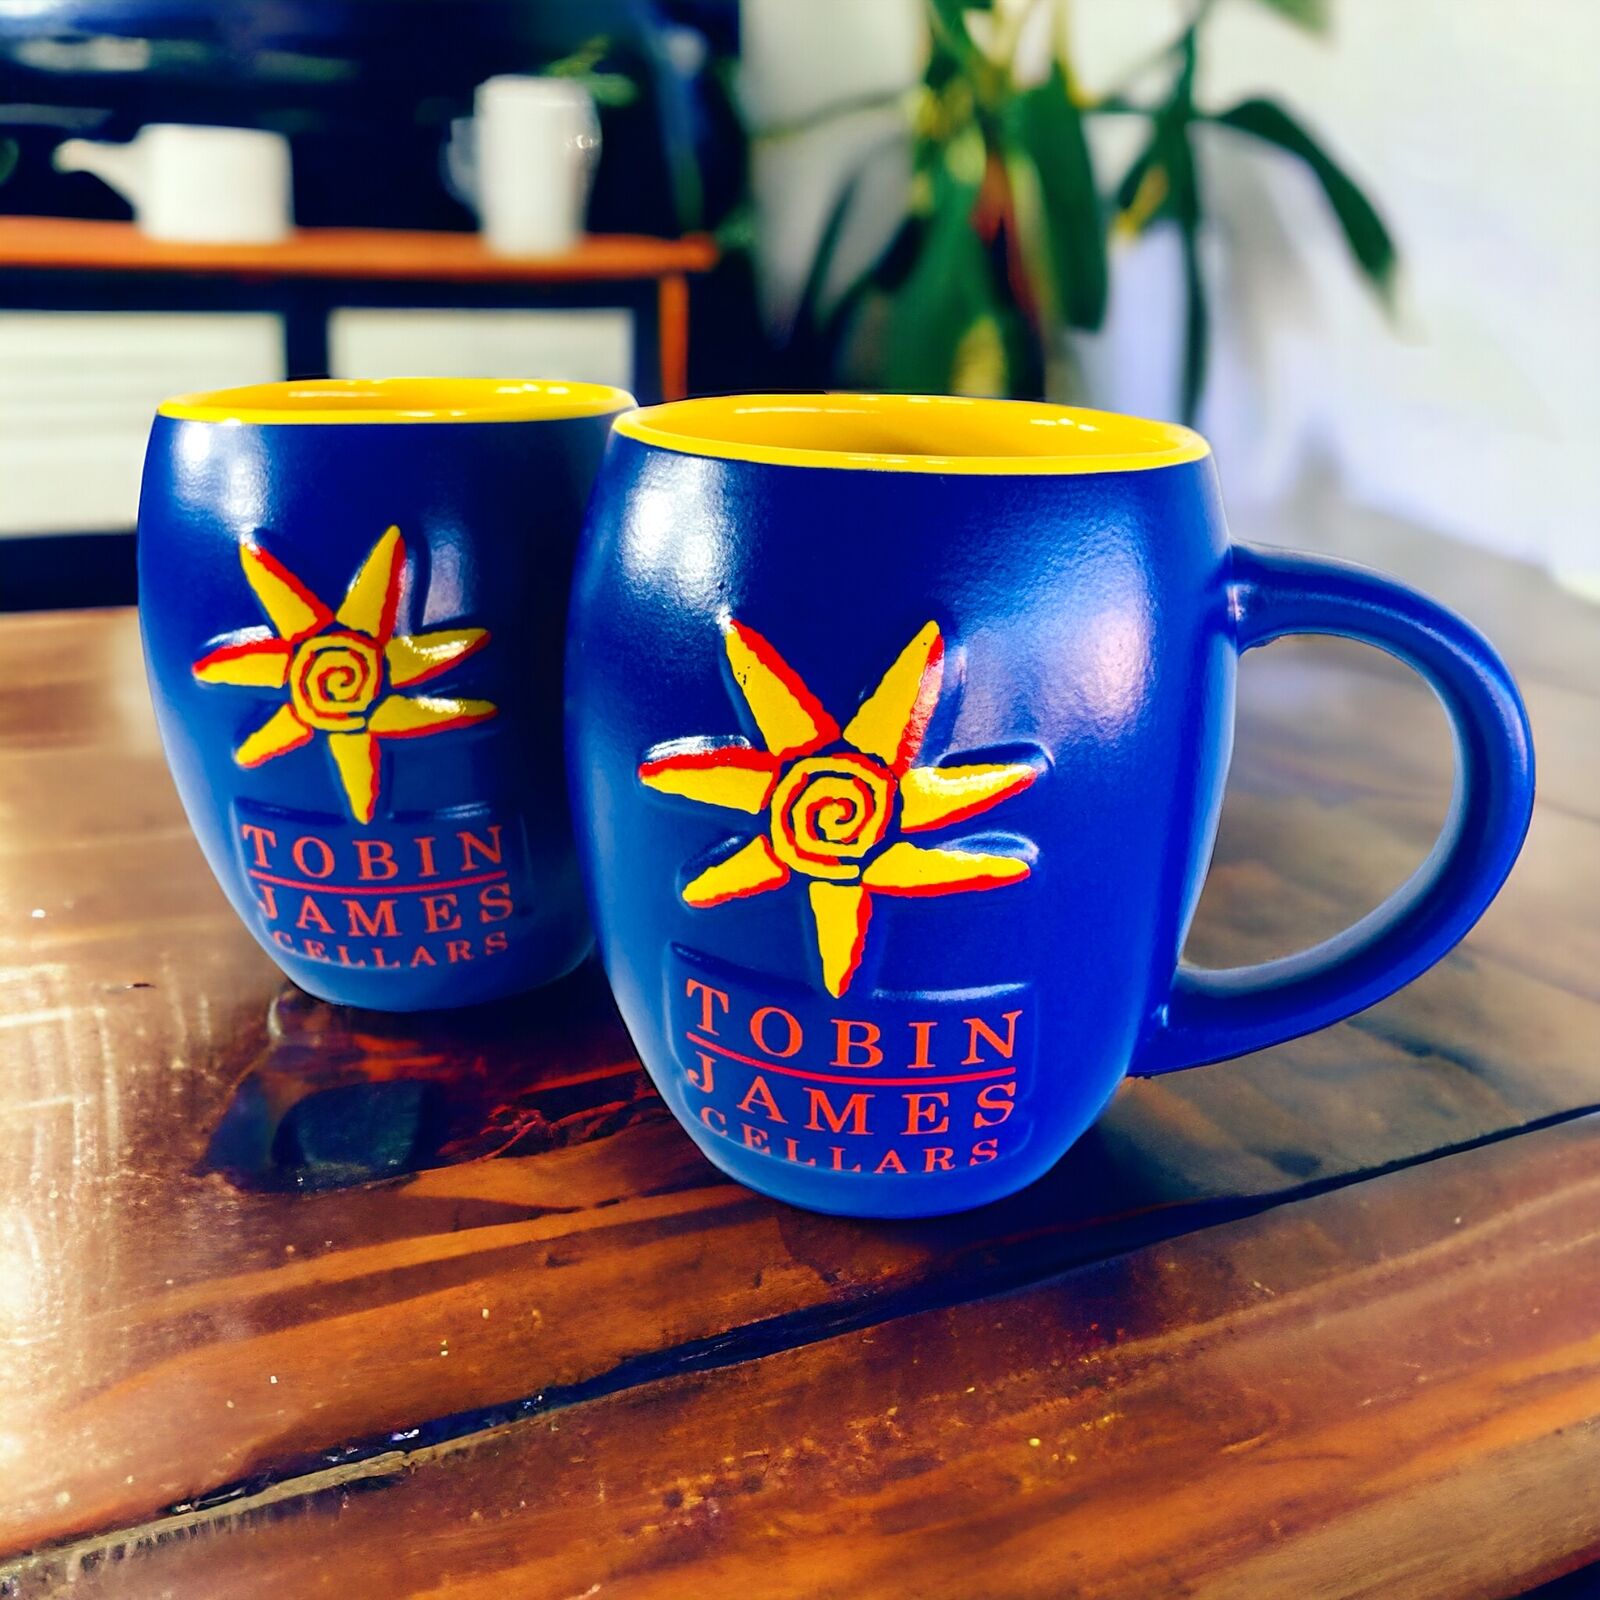 Tobin James Cellars Winery Blue Ceramic Sunshine Coffee Mugs - Set of 2